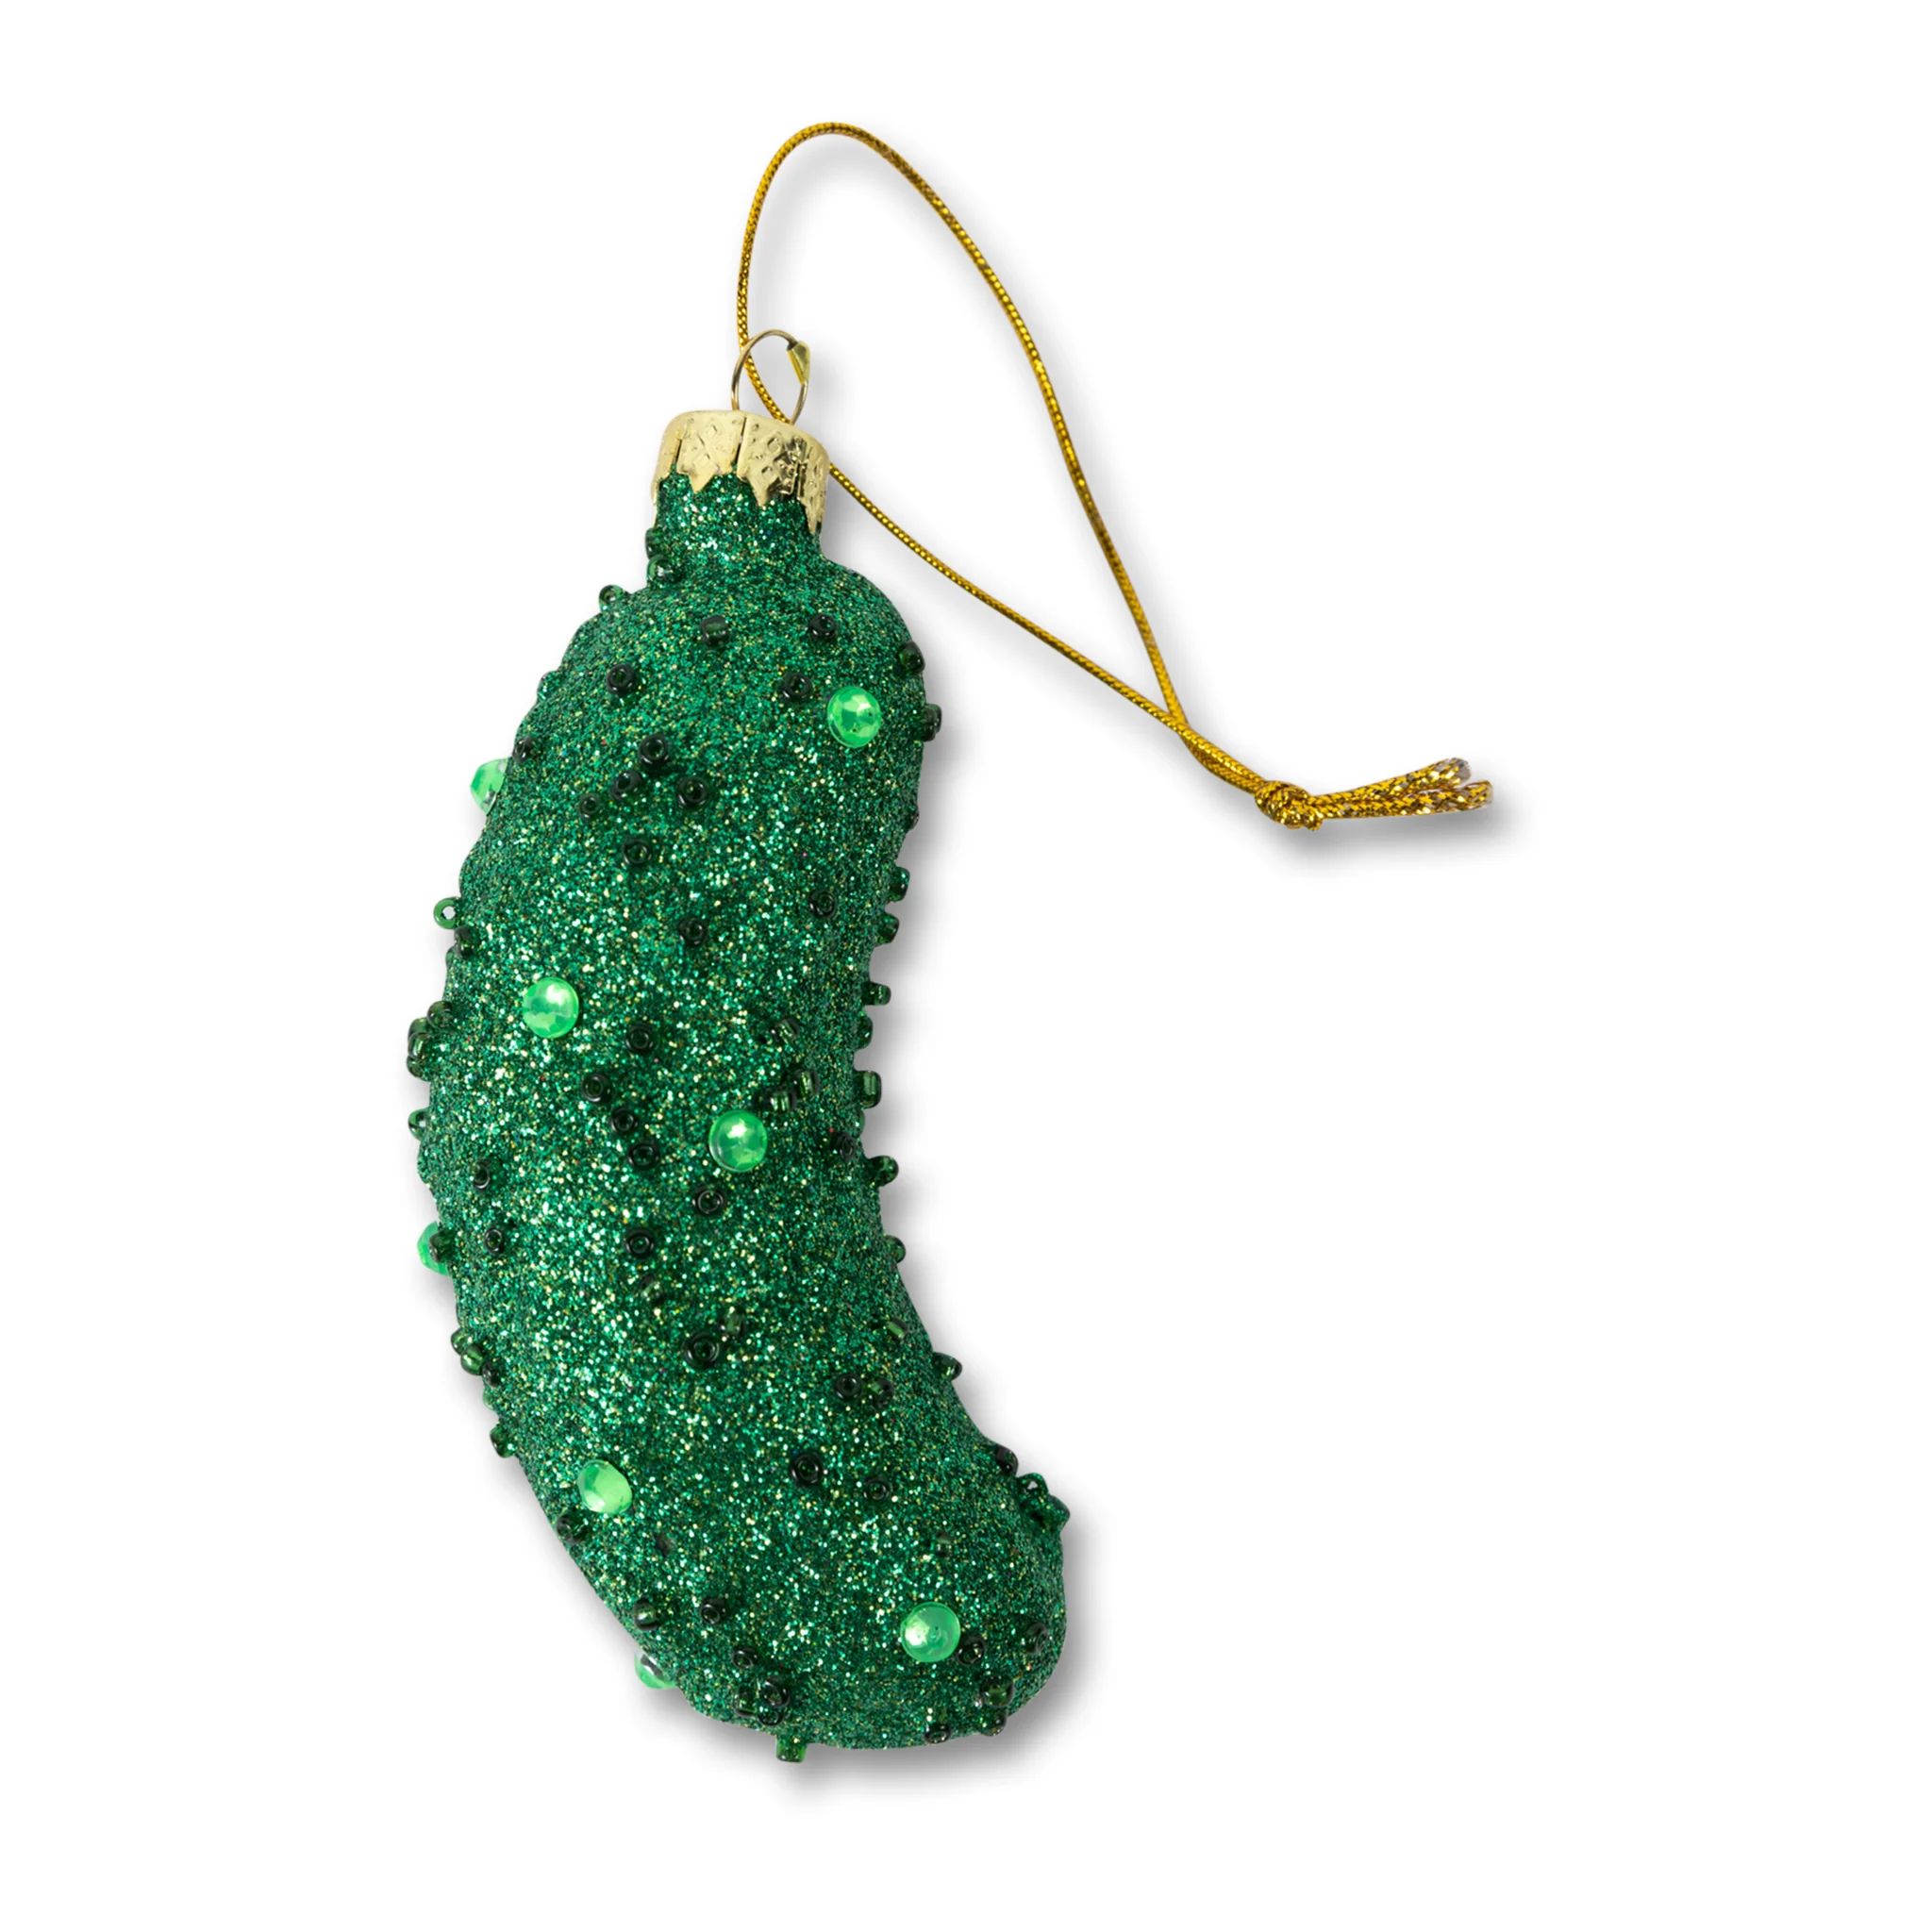 Jeweled Pickled Ornament | Furbish Studio